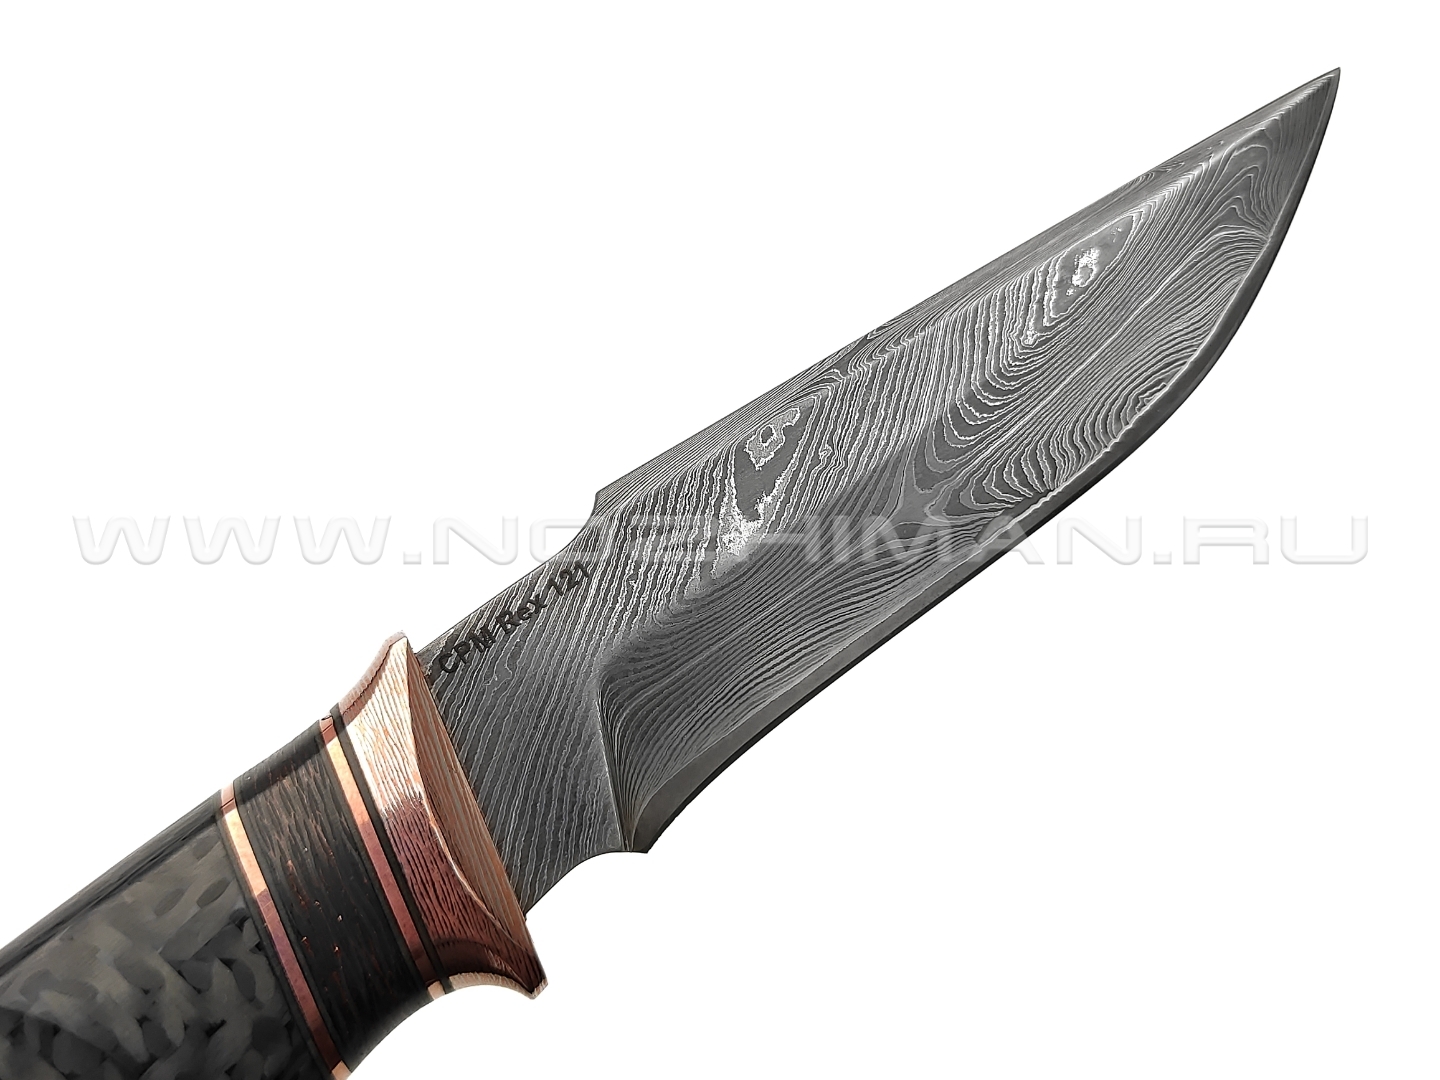 Кузница Васильева нож НЛВ154 ламинат CPM Rex 121, рукоять Carbon fiber, мокумэ-ганэ, бронза